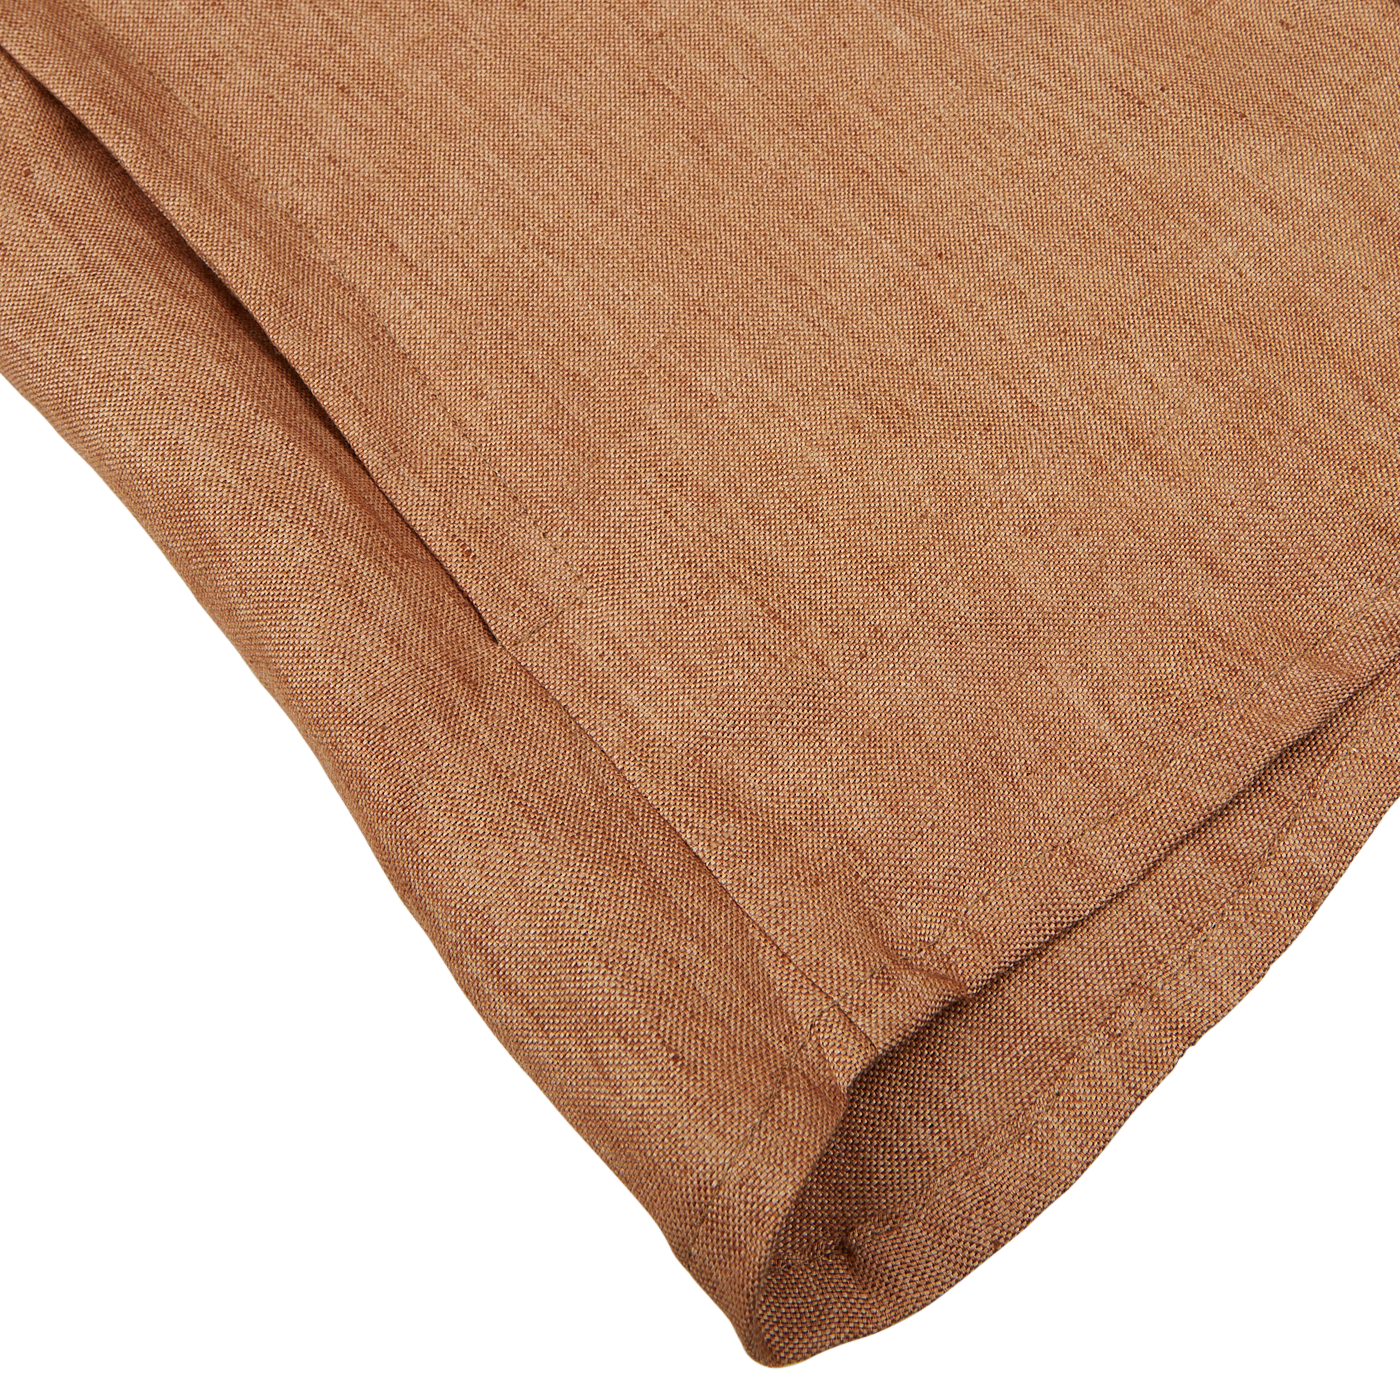 Folded tan Mazzarelli organic linen fabric napkin on white background.